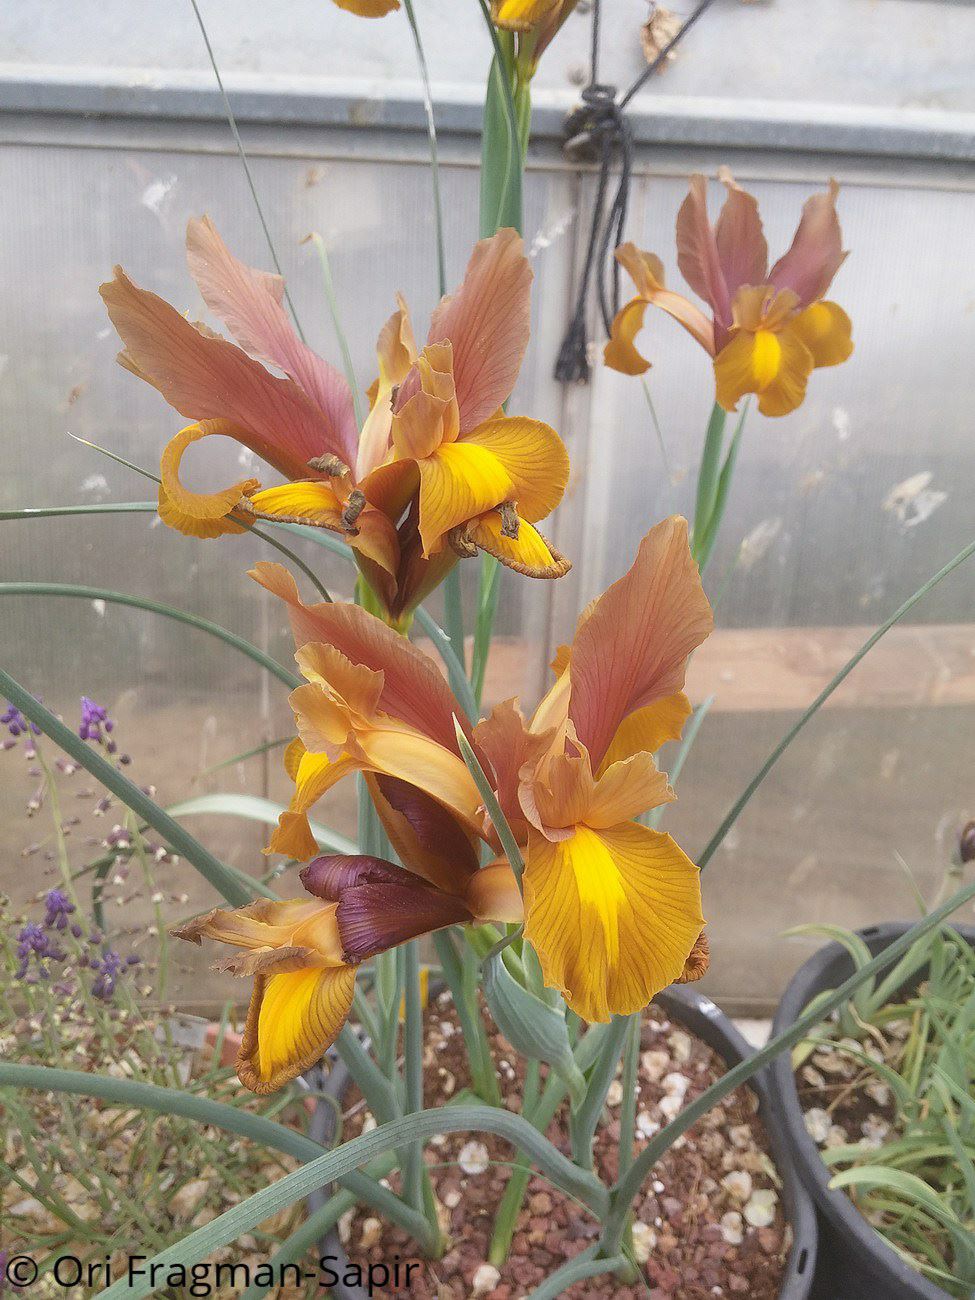 Iris × hollandica 'Bronze Beauty' - Dutch Iris 'Bronze Beauty', איריס הולנדי 'ברונז ביוטי', איריס הולנדי 'ברונז ביוטי'